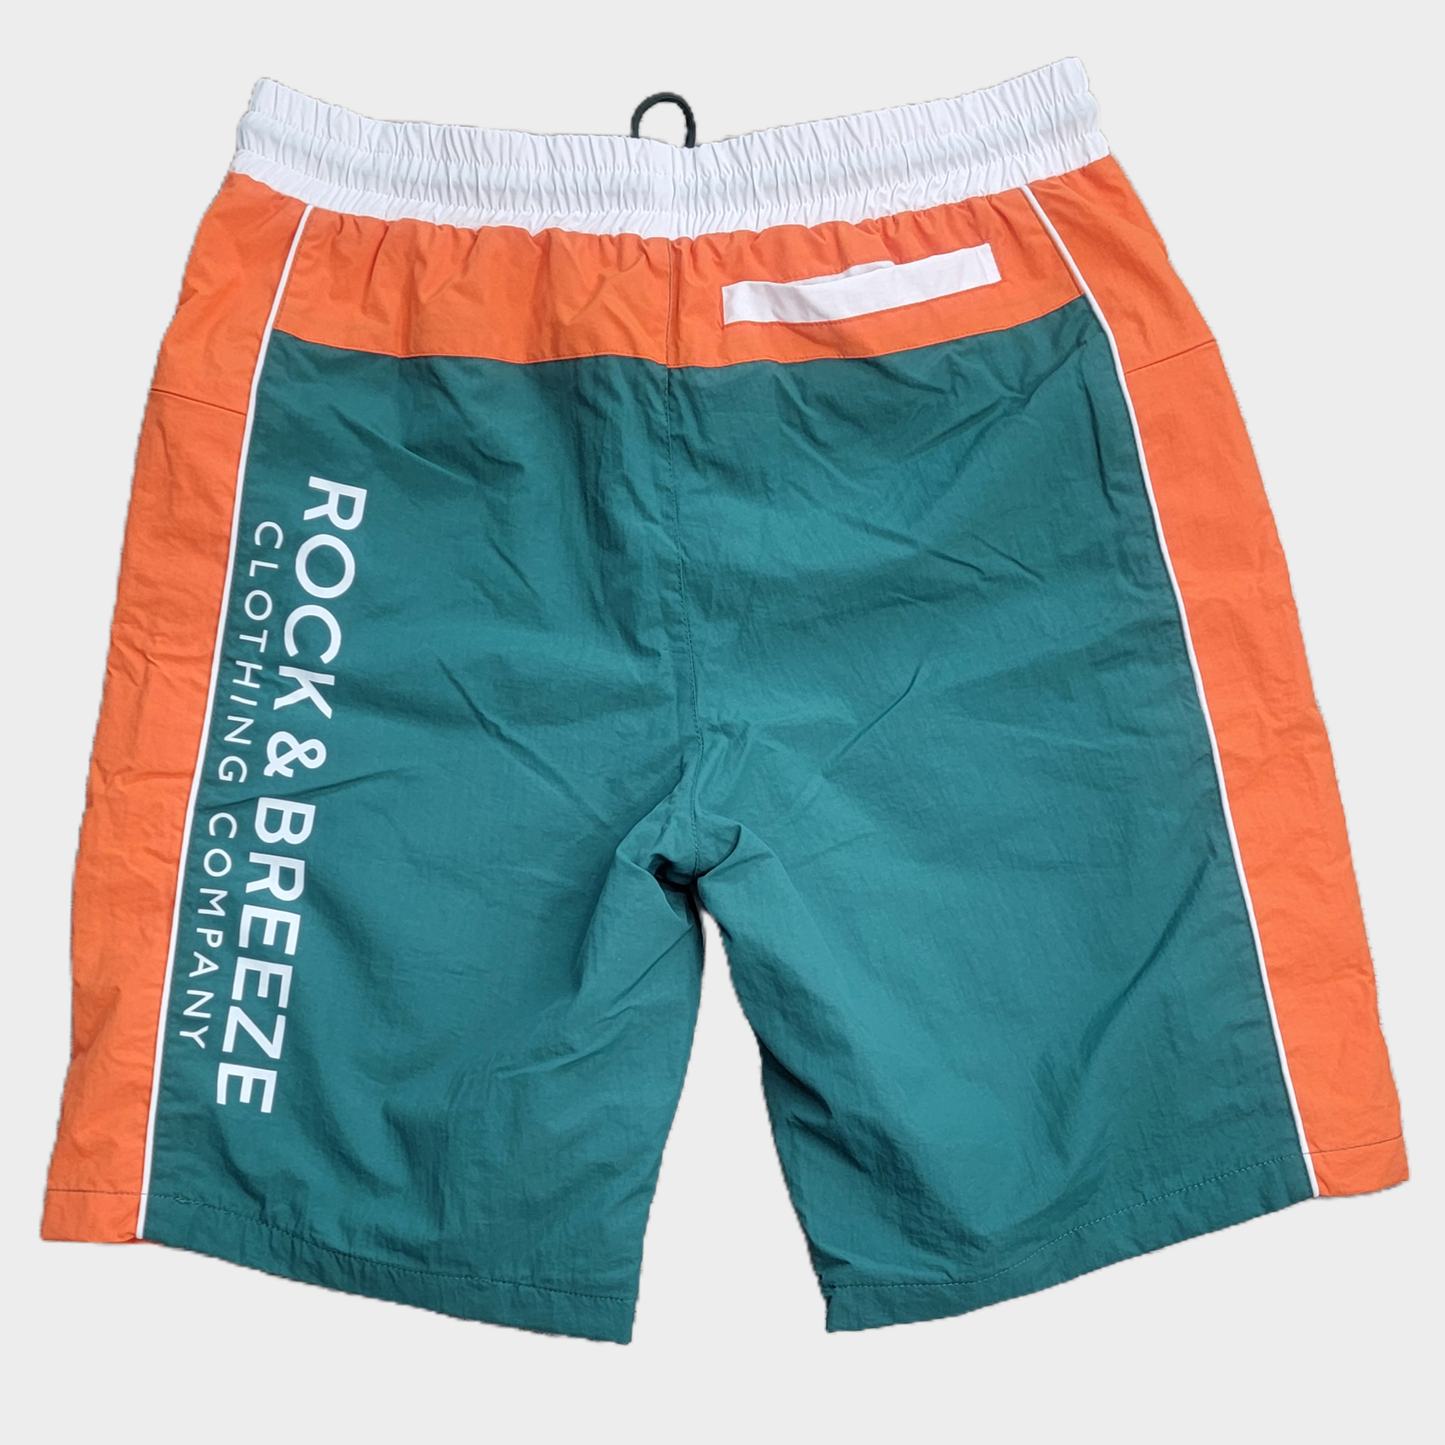 Rock & Breeze Utility Shorts - Green